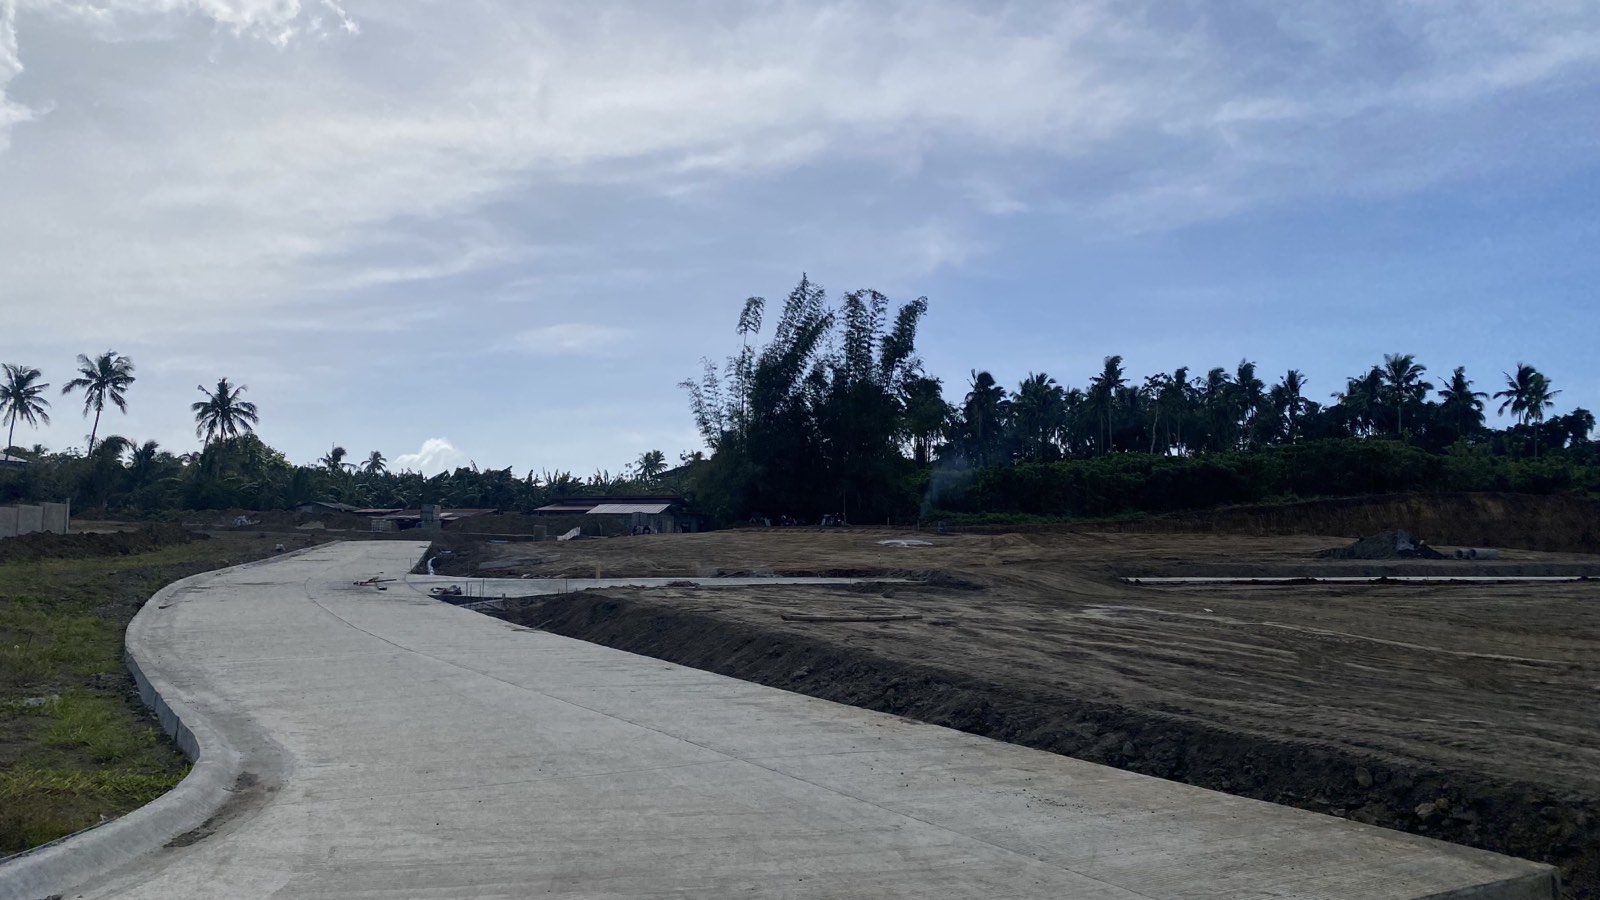 February - Road Construction & Development